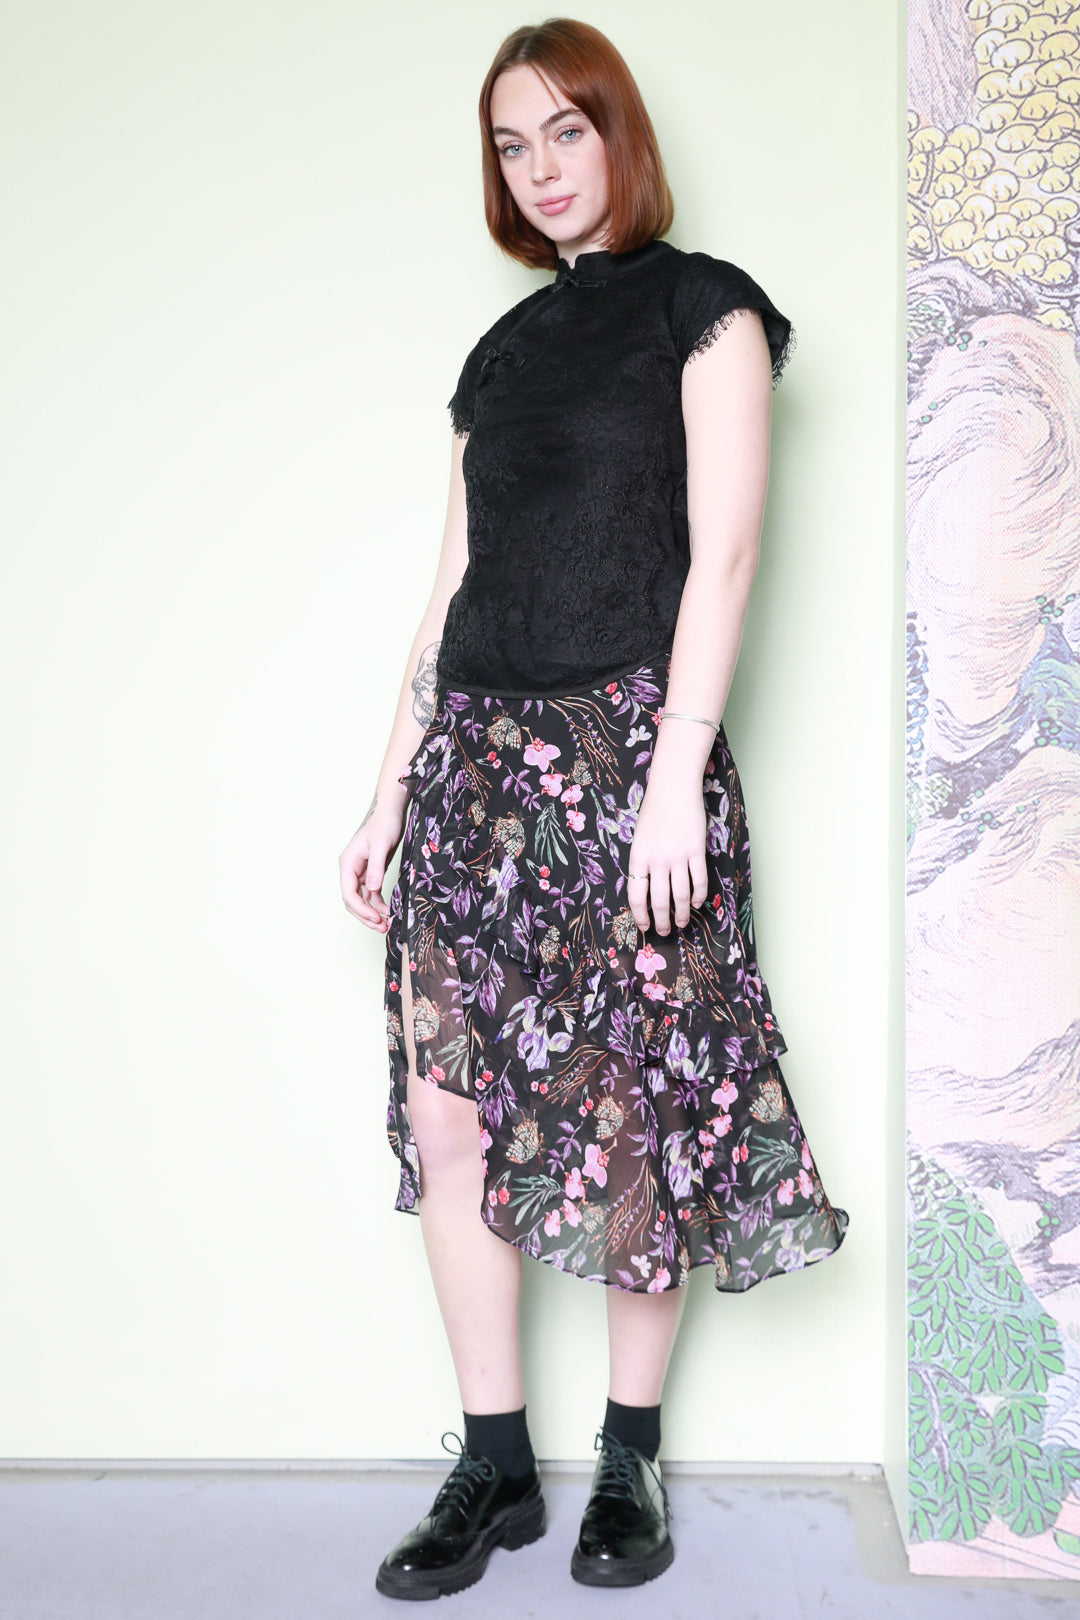 Silk Floral Prints Ruffle Layer Skirt